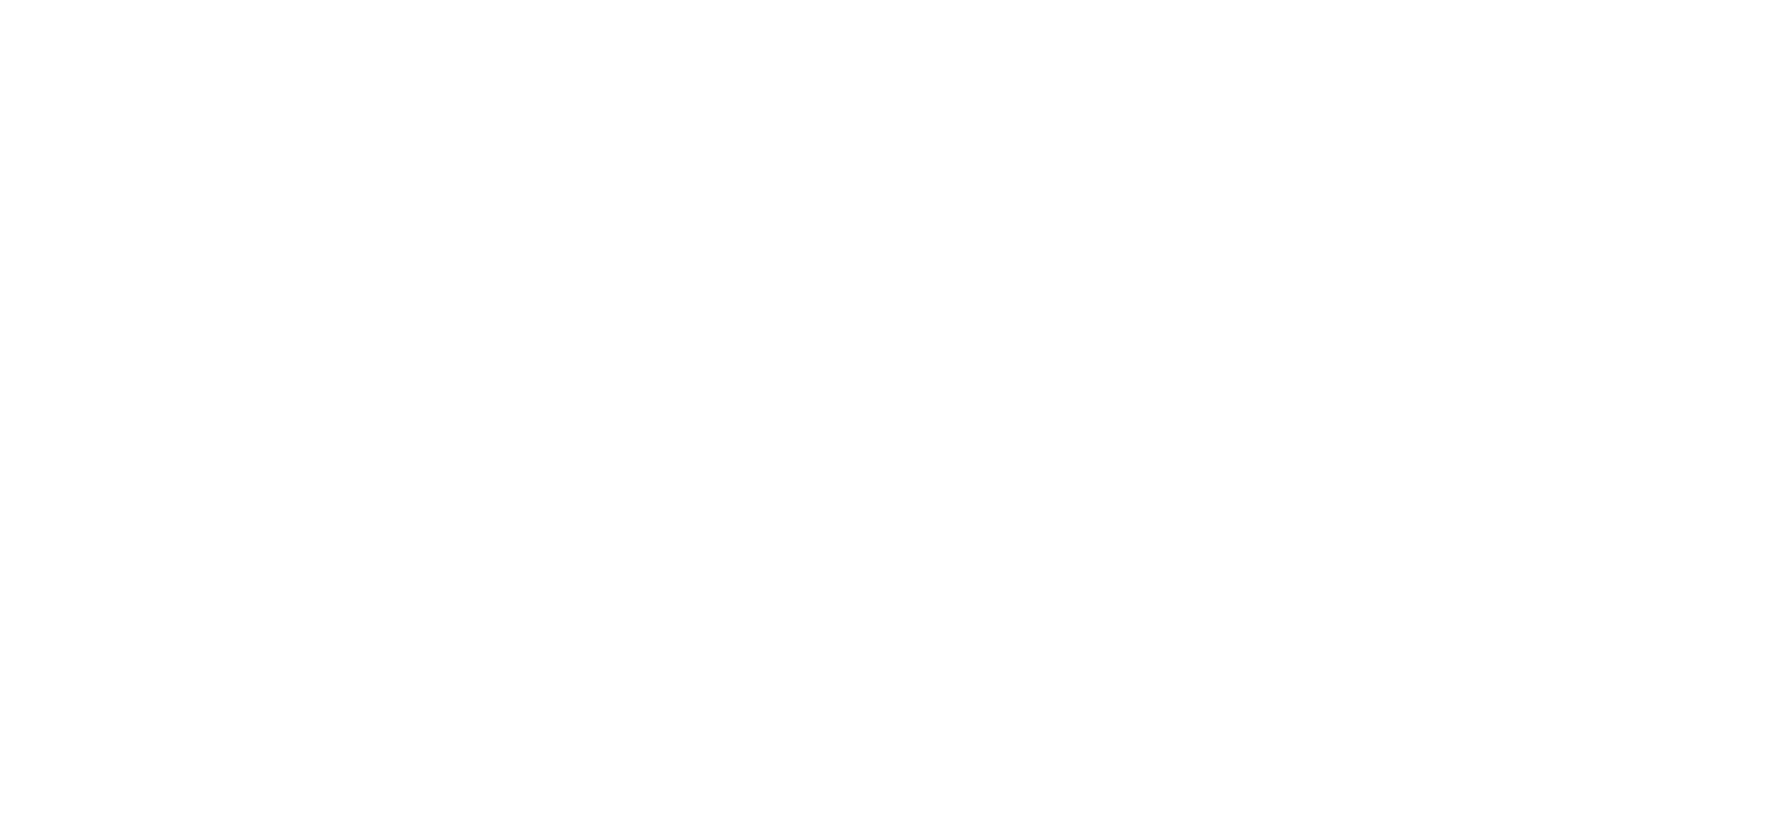 Hoot Host Monterey California